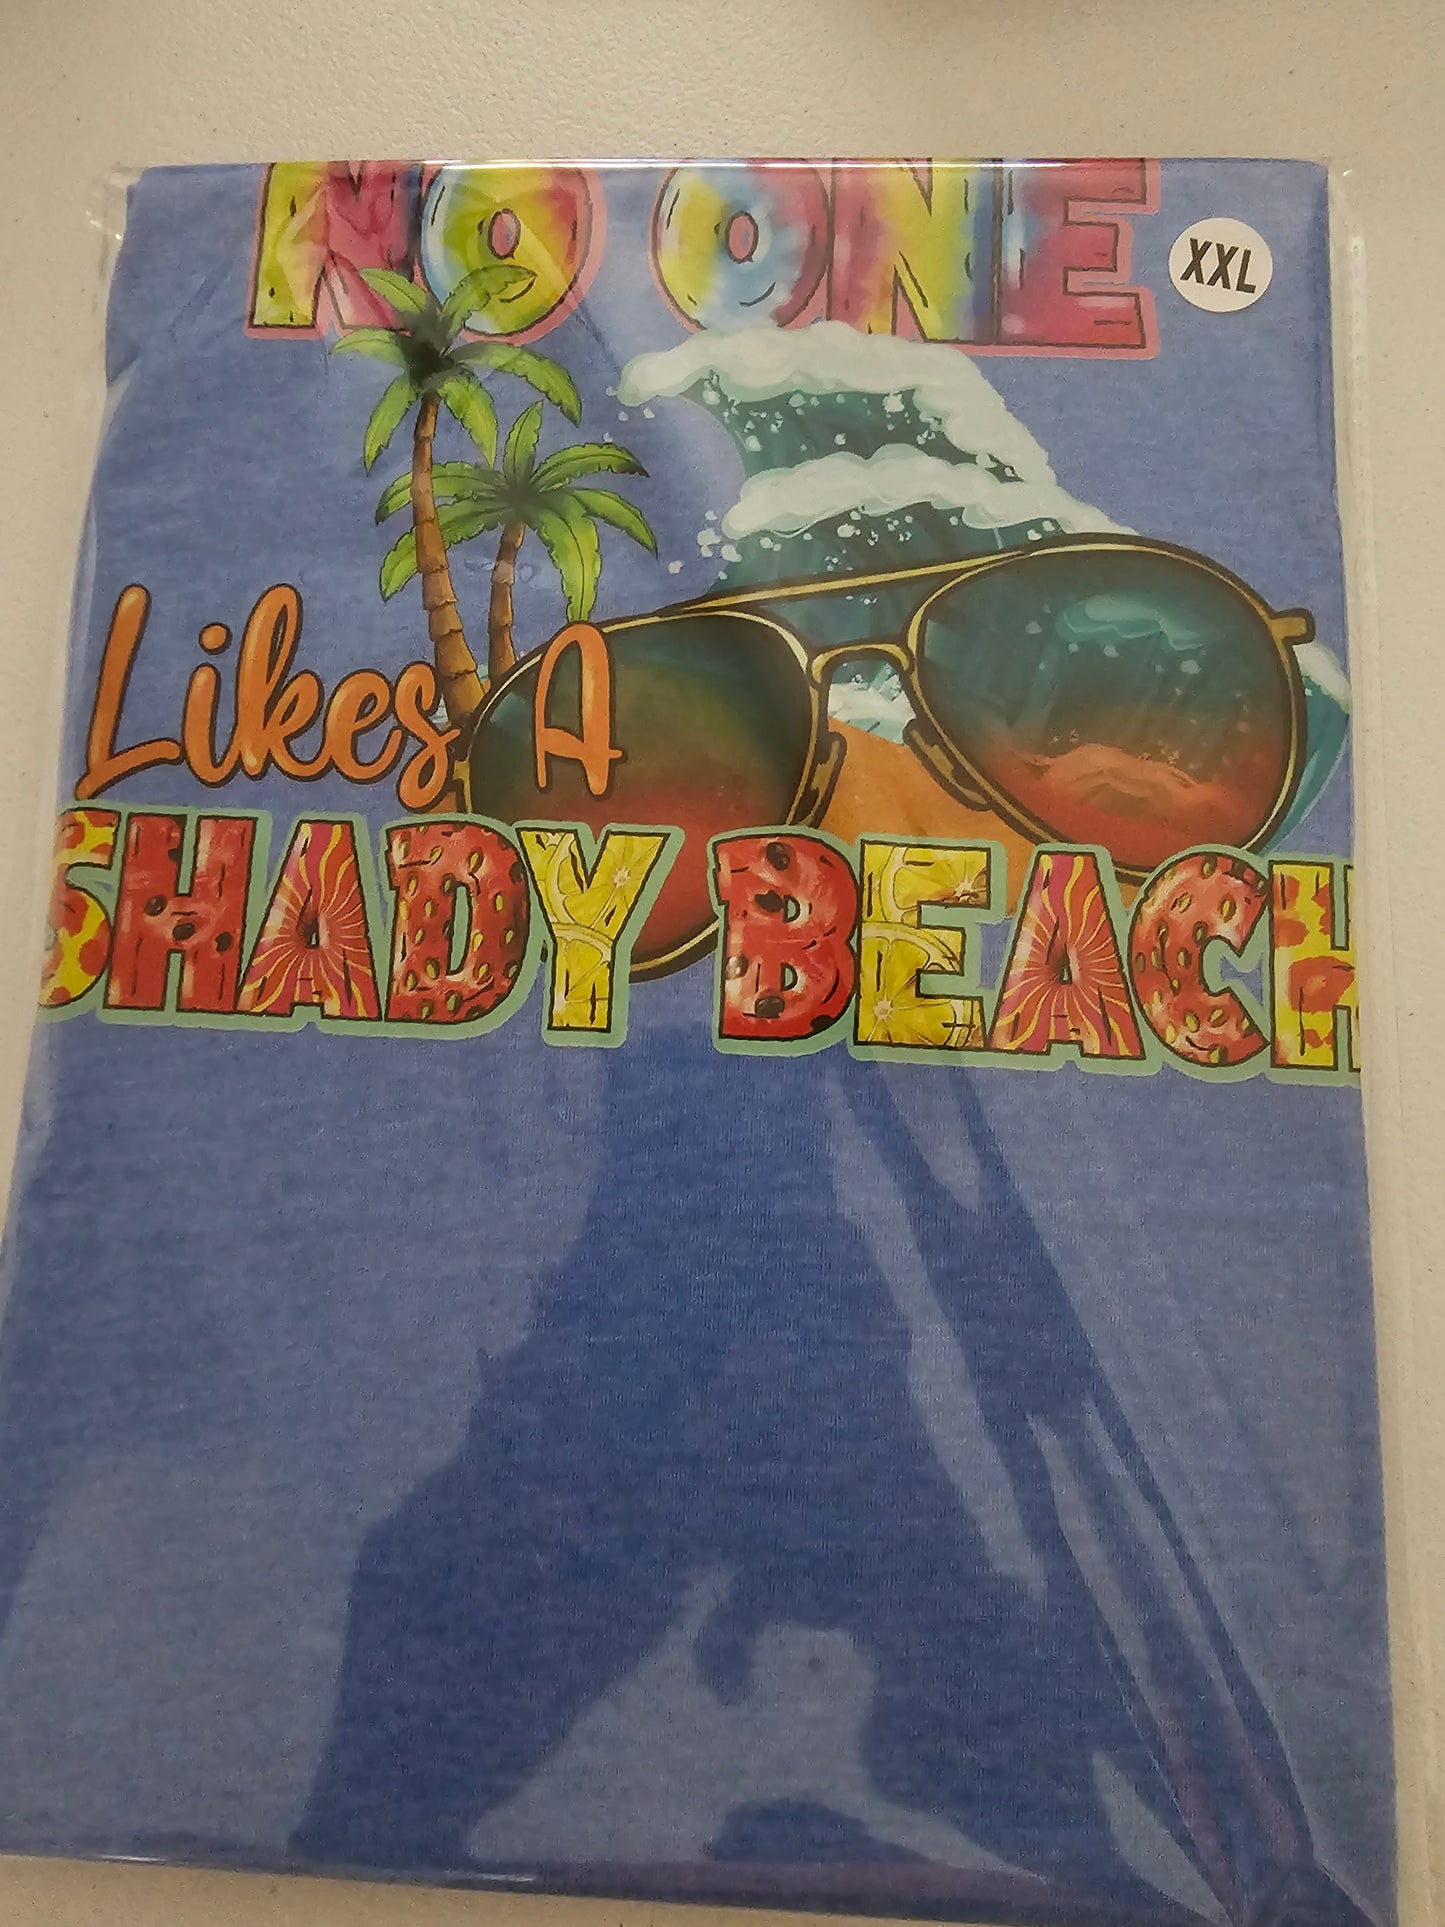 No One Likes A Shady Beach Handmade Graphic T Shirt